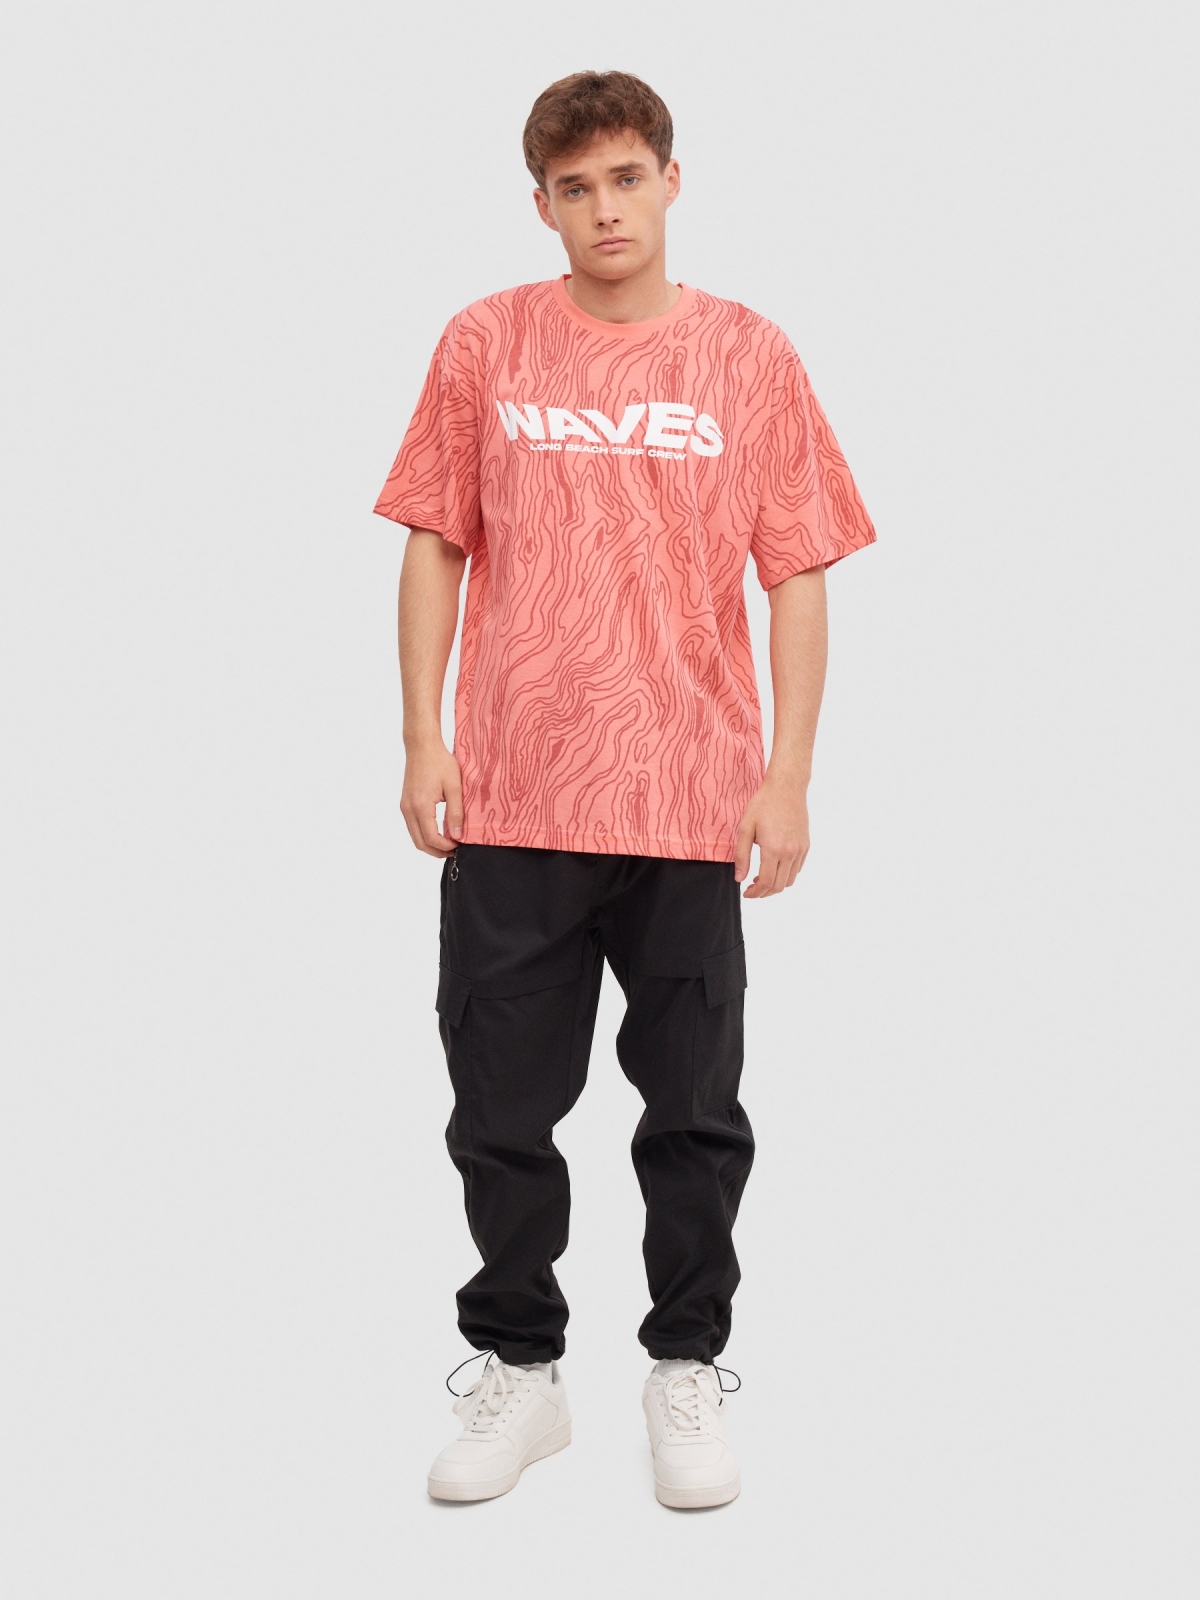 T-shirt allover waves rosa vista geral frontal